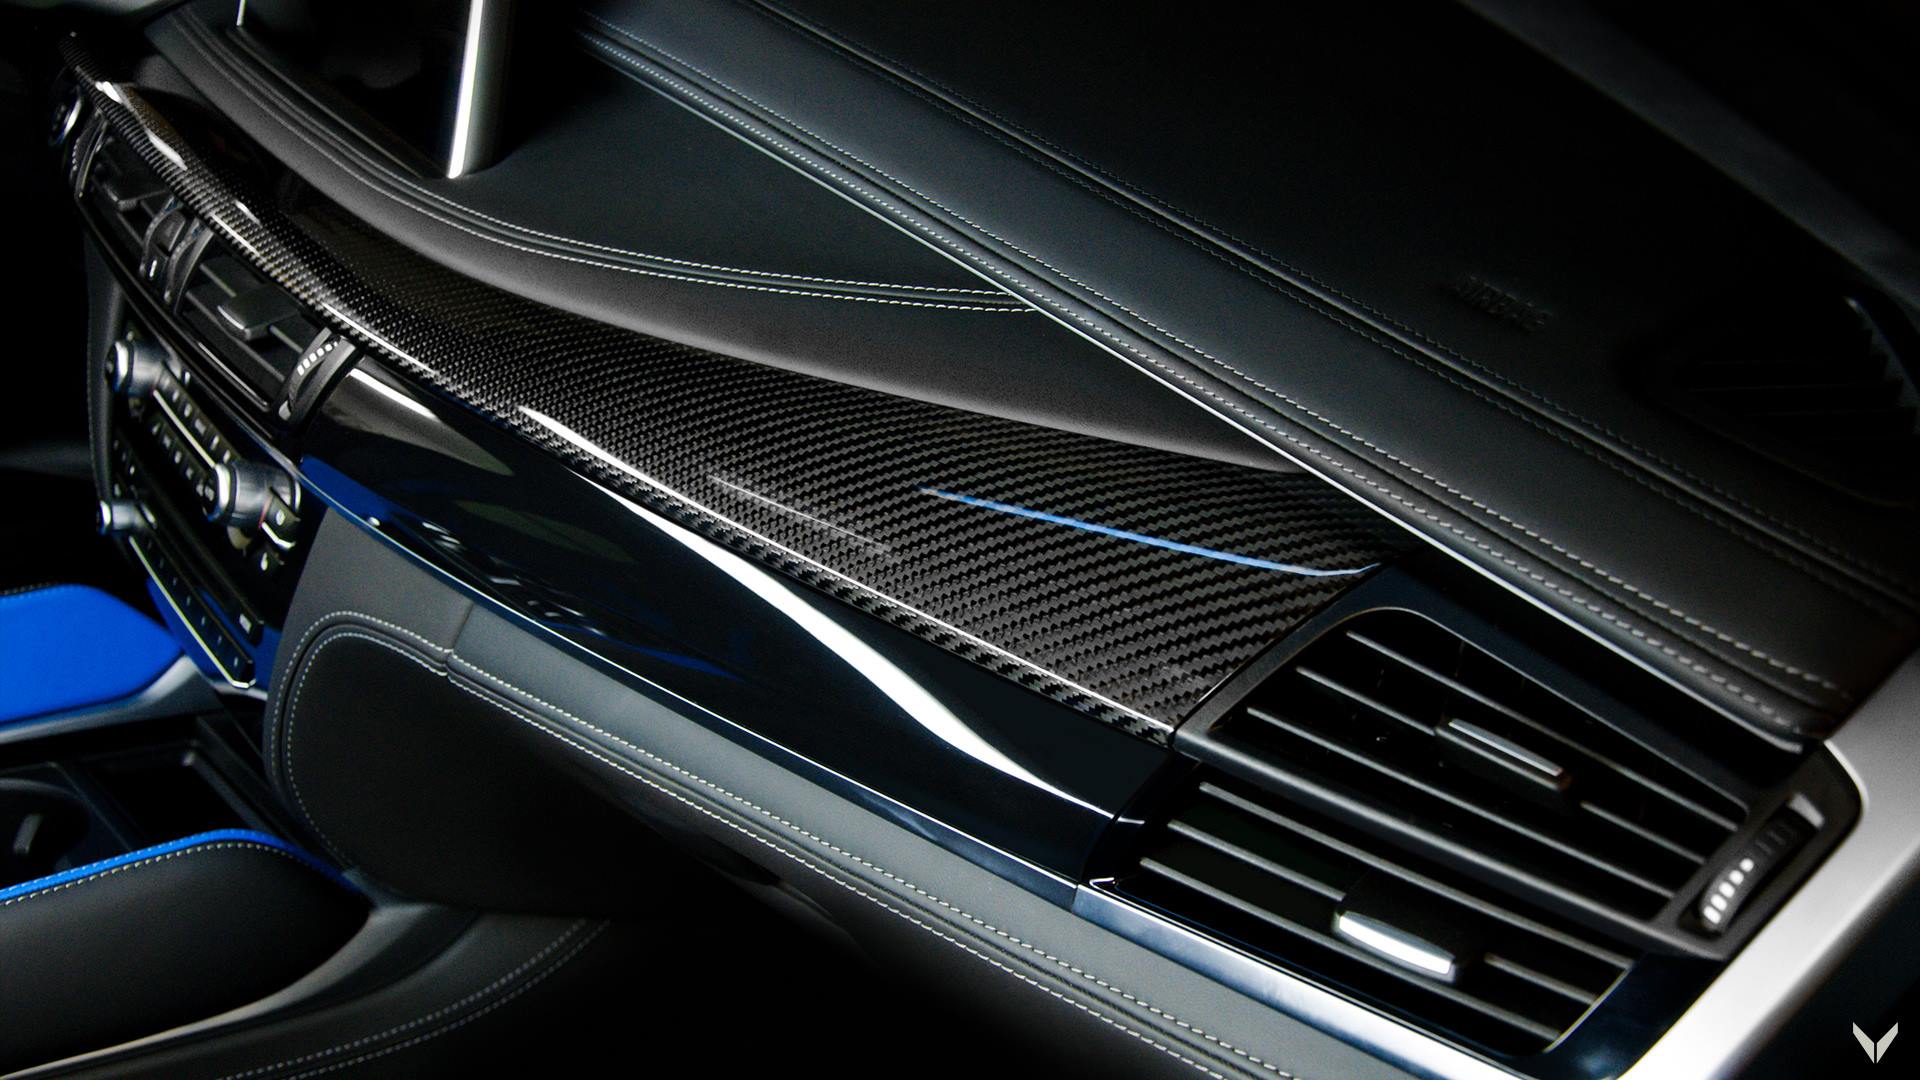 Vilner BMW X6 M F86 Luxus Interieur Tuning 12 Vilner BMW X6 M (F86) mit Luxus Interieur in blau/schwarz